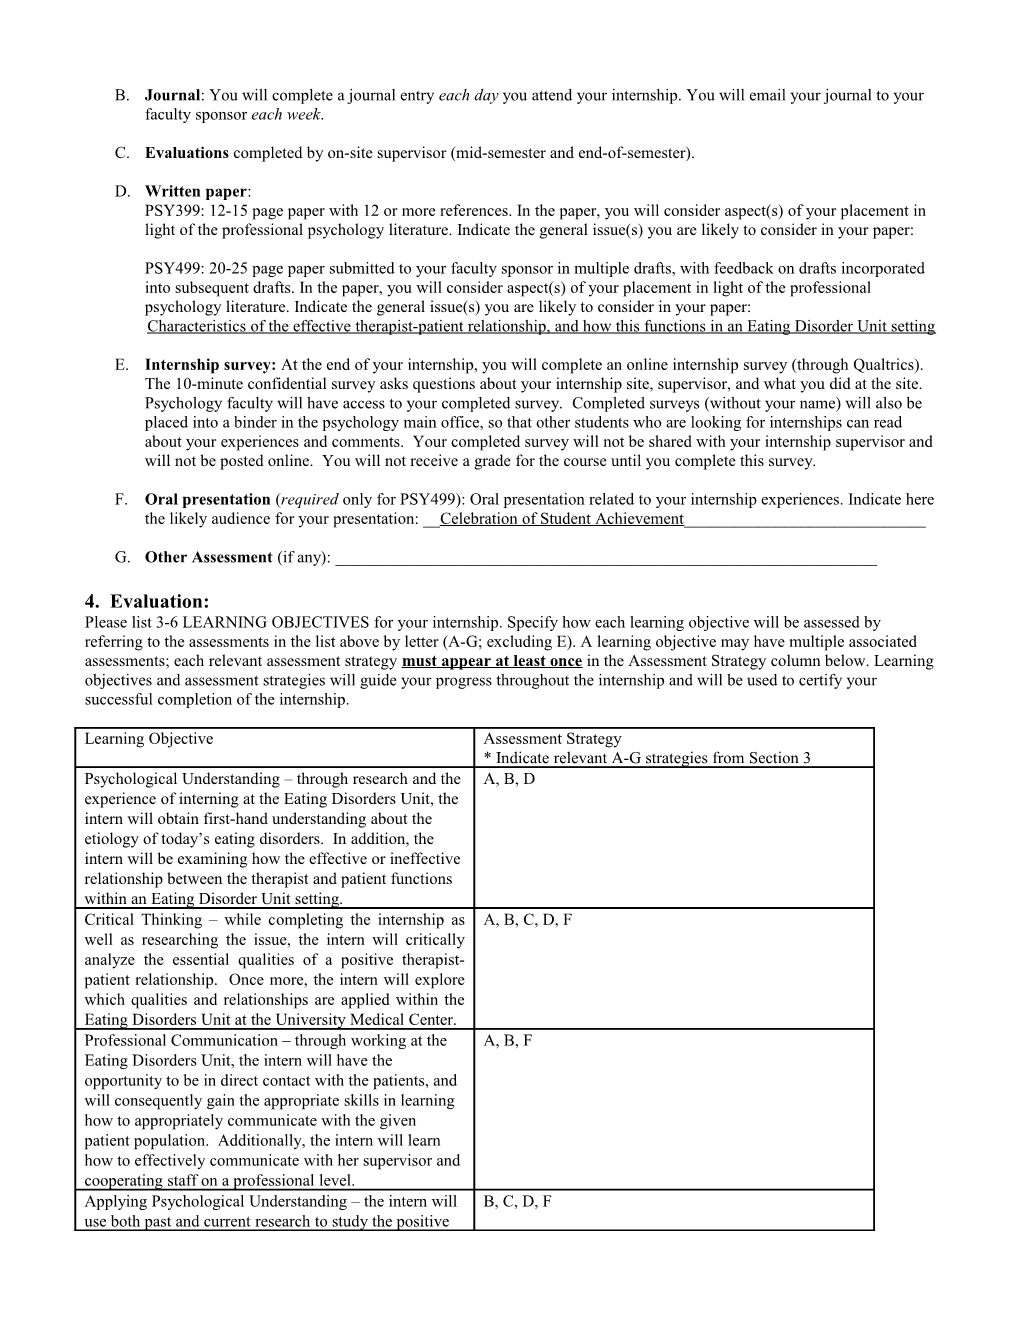 Samplepsychology Department Internship (PSY 499) Attachment Form